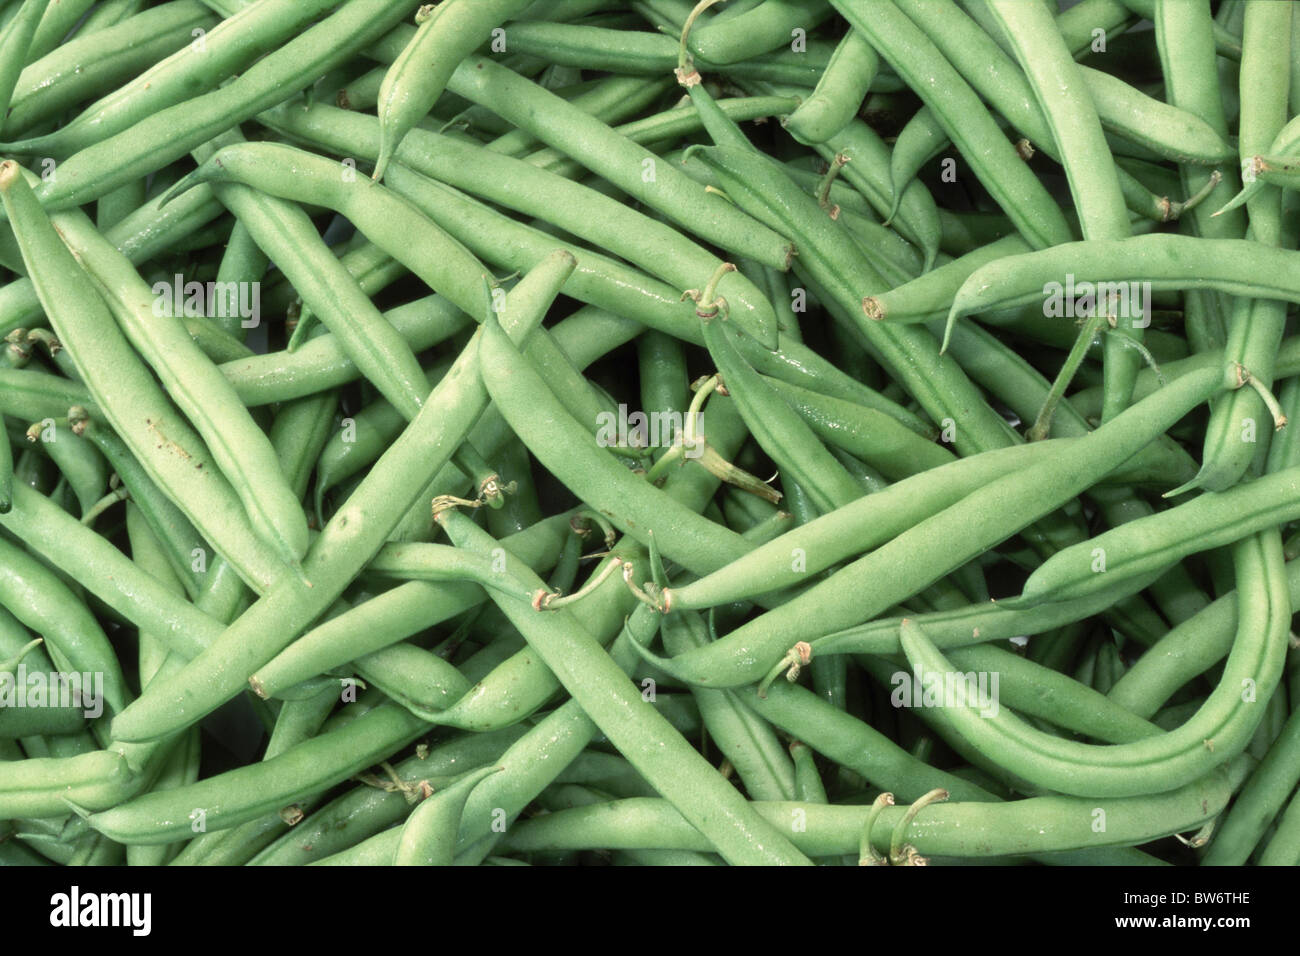 Green Runner Beans (Phaseolus vulgaris nanus) seen from above, studio picture Stock Photo